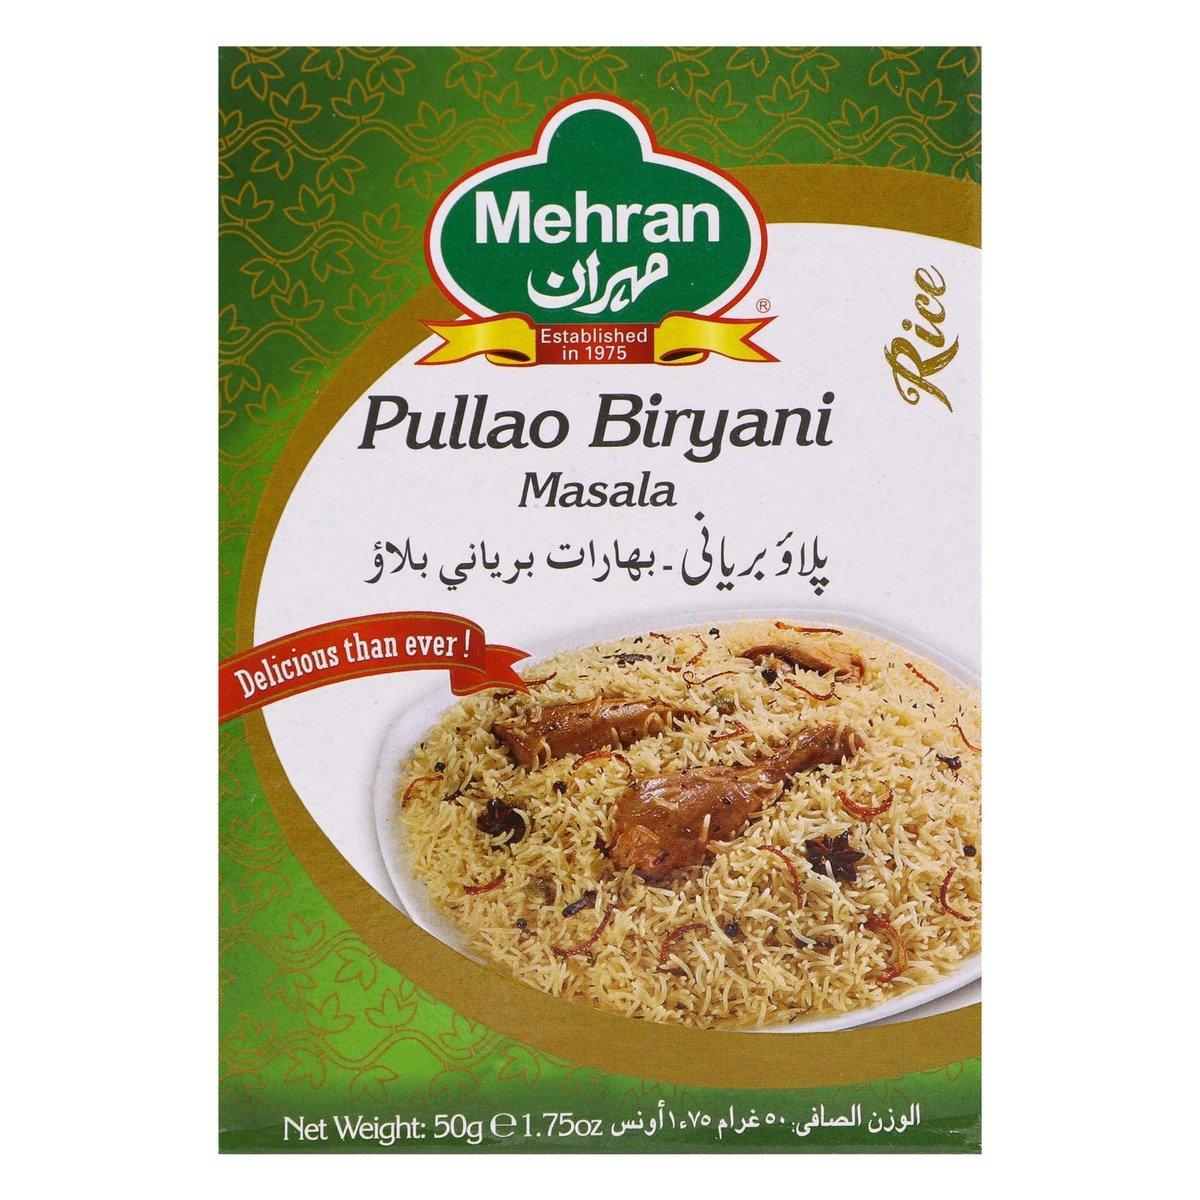 Mehran Pullao Biryani Masala, 50 g